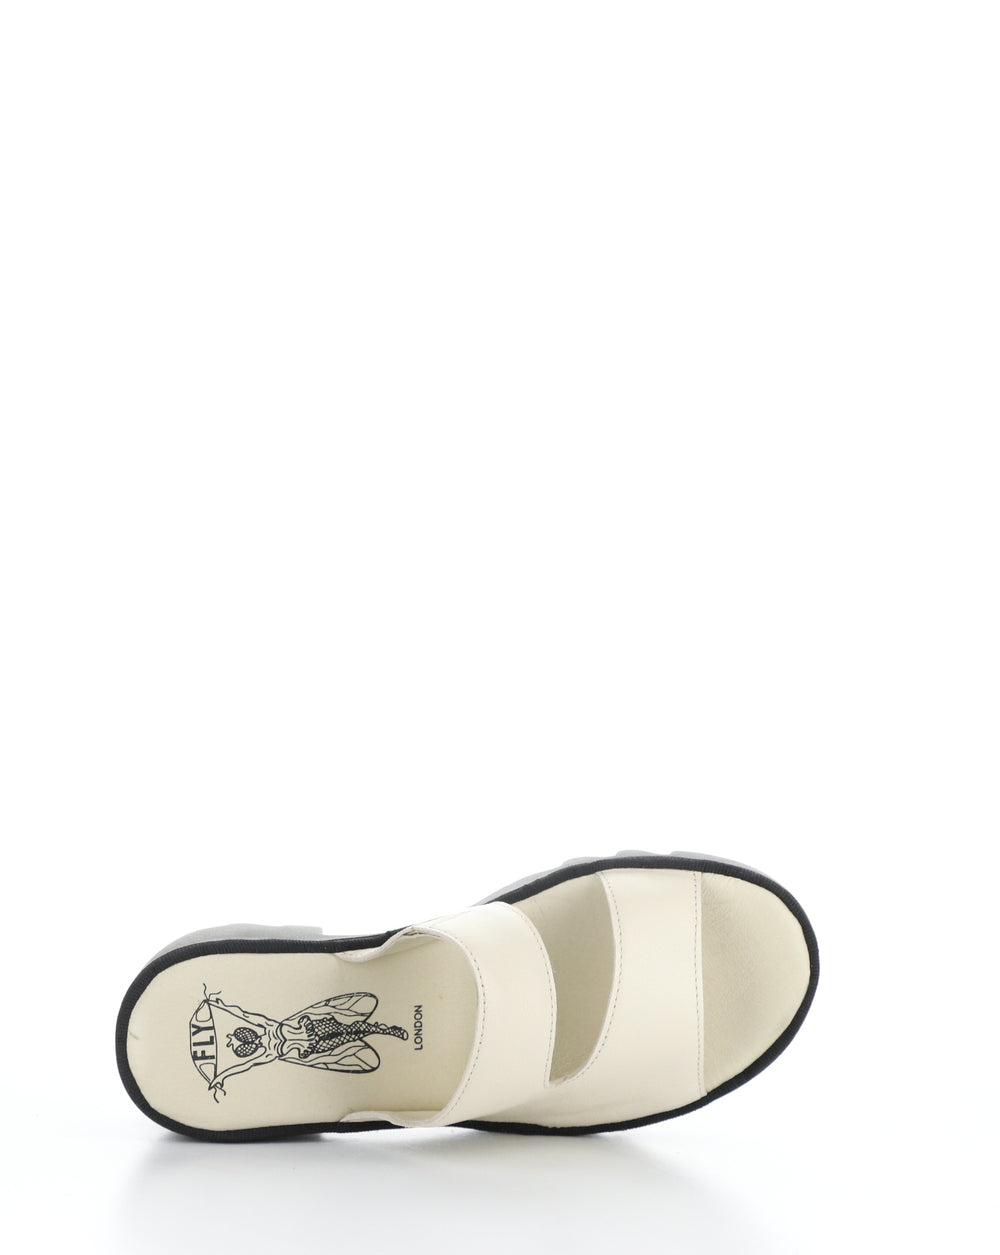 TECH493FLY 005 OFF WHITE Slip-on Sandals